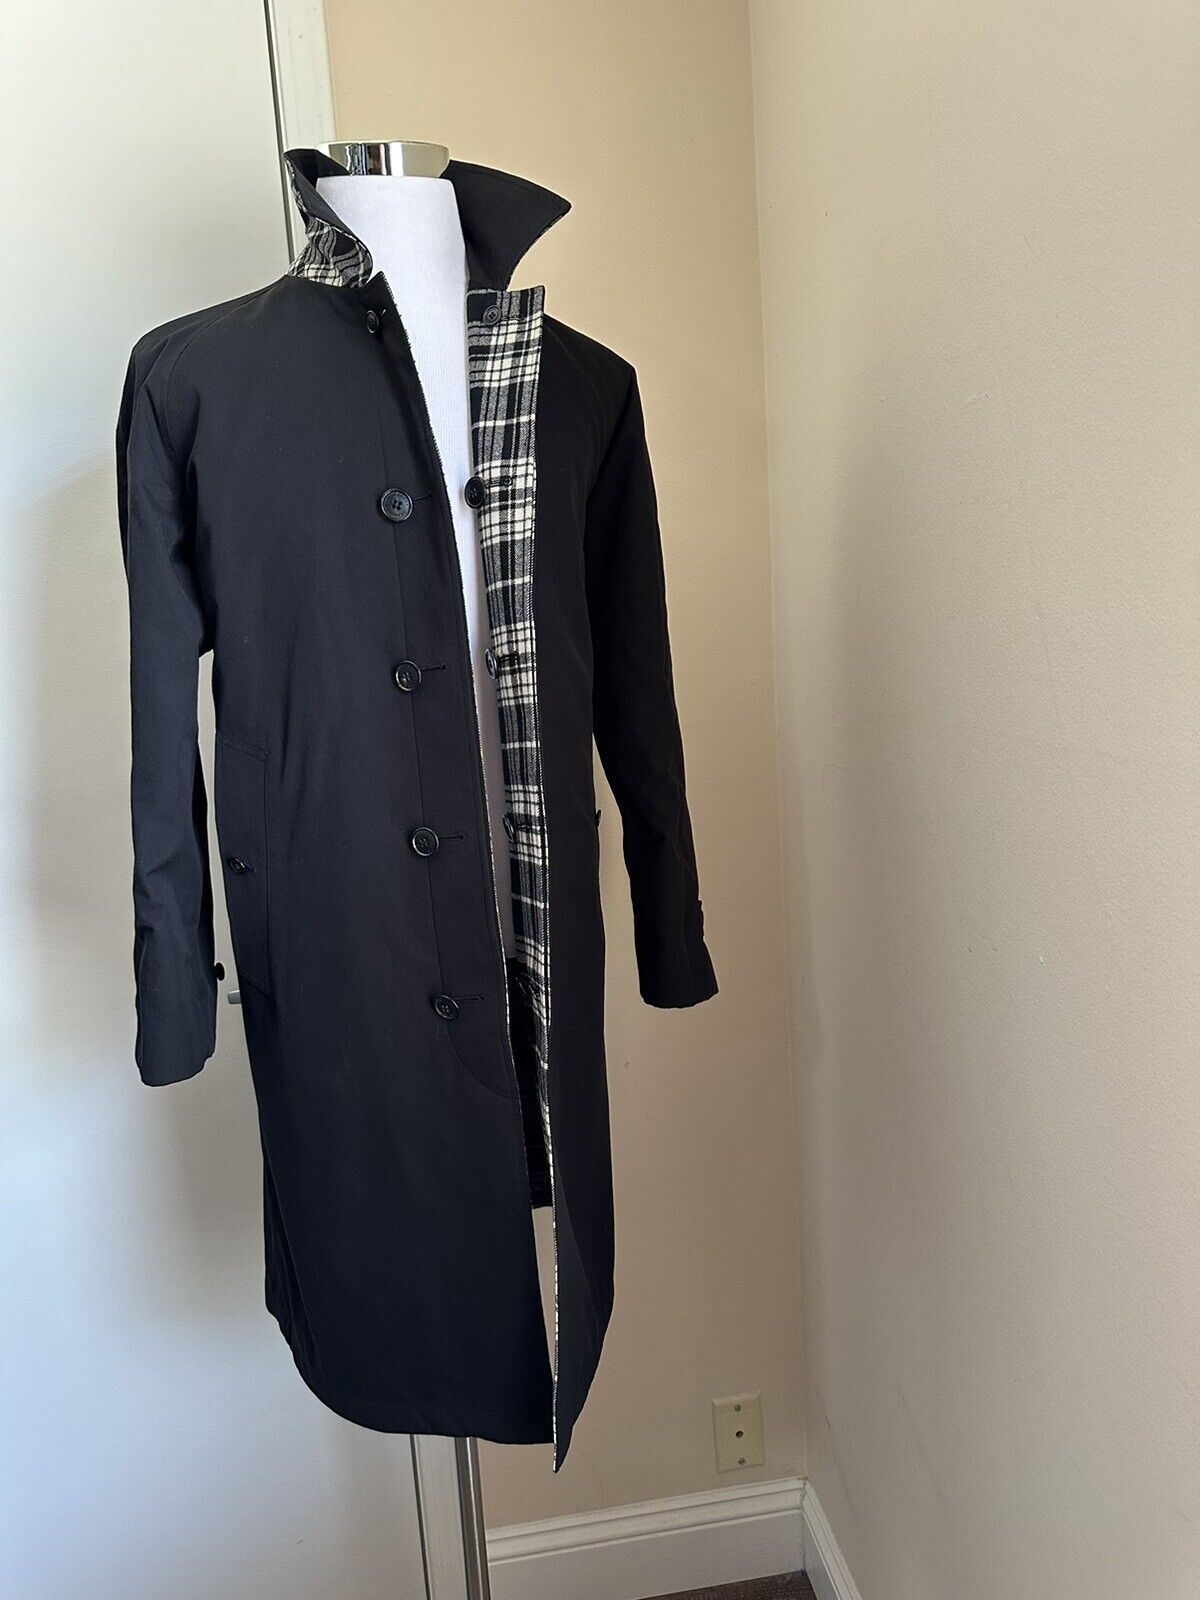 New $2790 Burberry Men Heathcoate Reversible Top Coat Black size 38 US/48 Eu